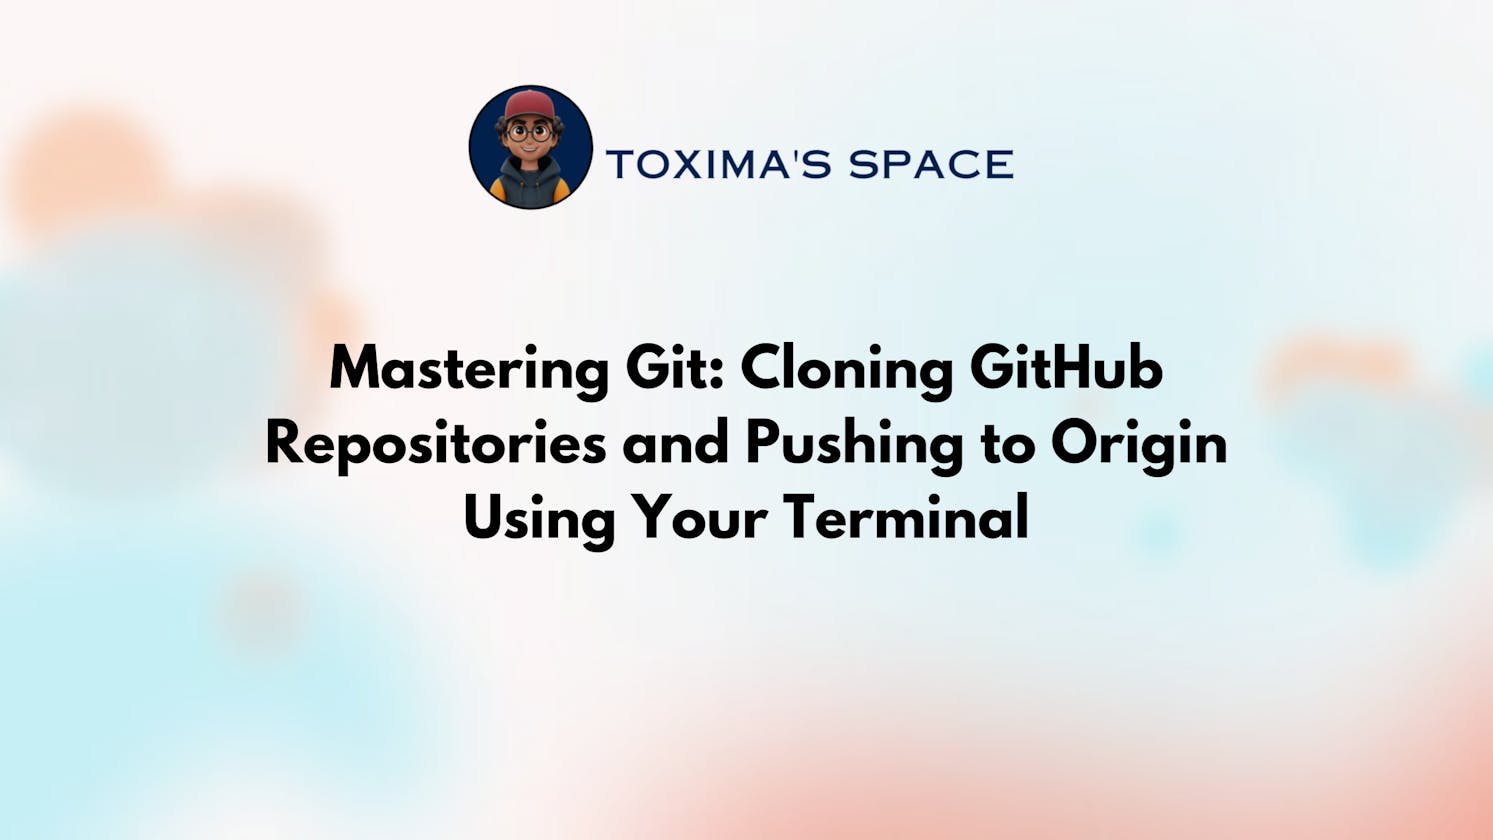 Mastering Git: Cloning GitHub Repositories and Pushing to Origin Using the Terminal